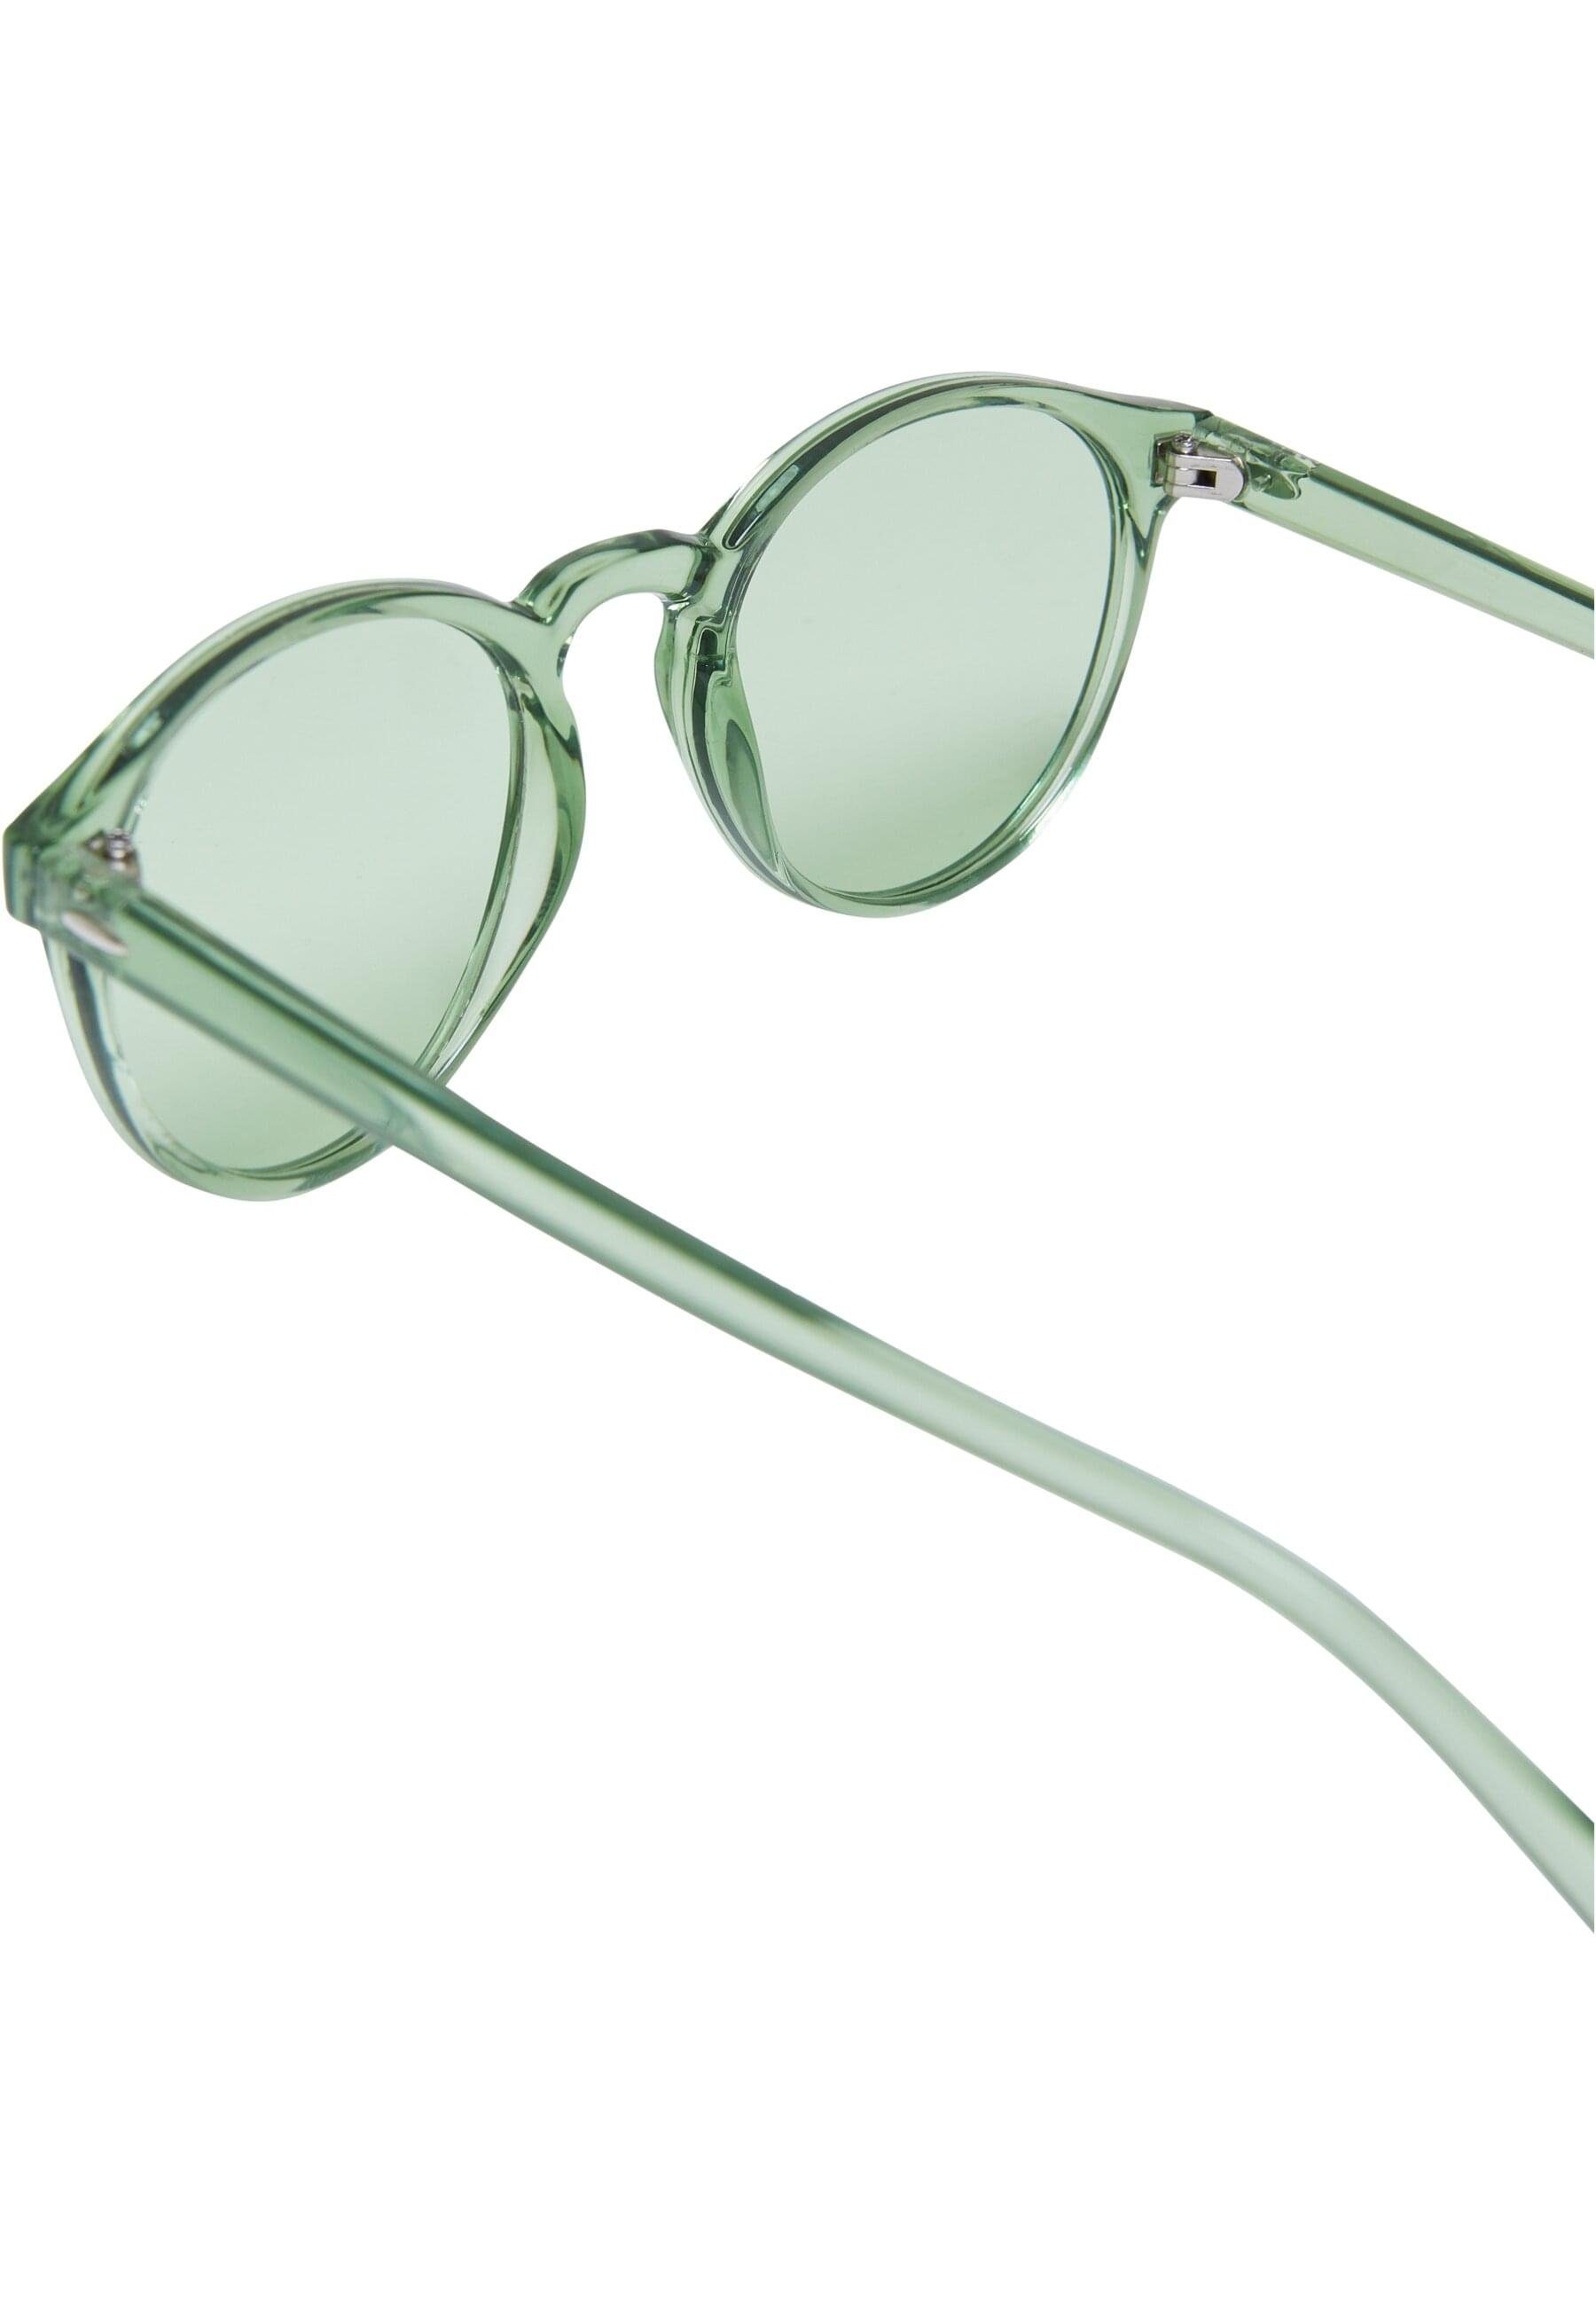 URBAN black/palepink/vintagegreen Sunglasses Cypress Unisex CLASSICS 3-Pack Sonnenbrille